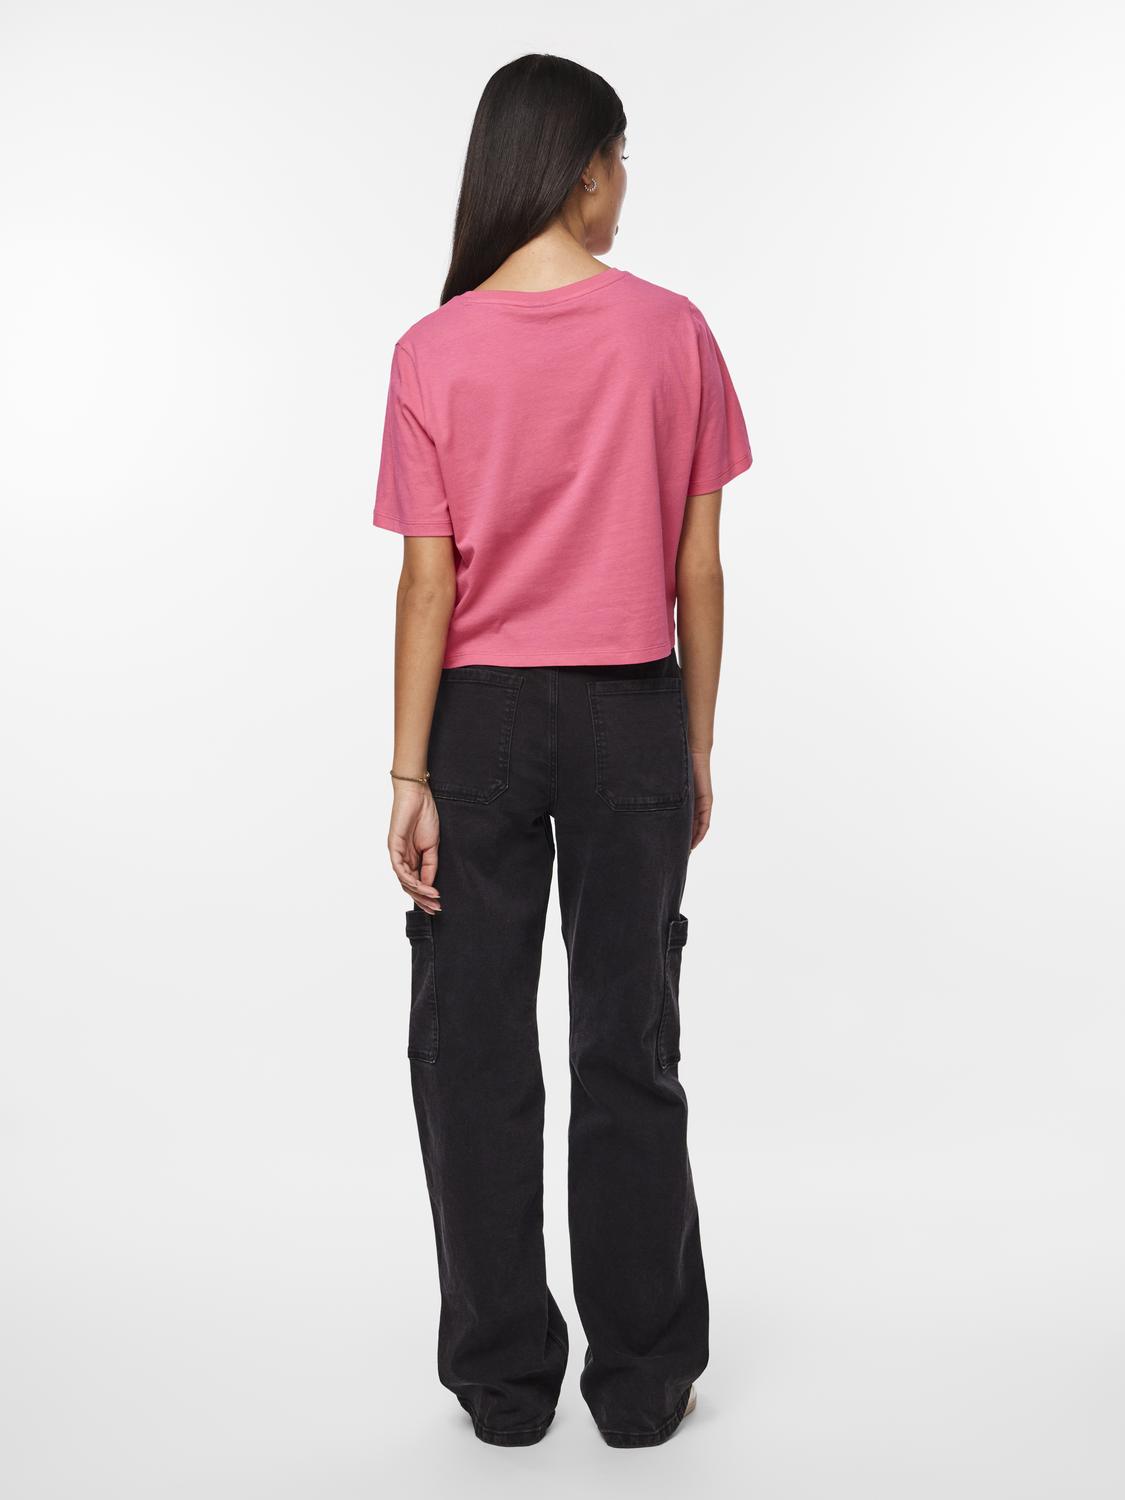 PCSARA T-Shirt - Hot Pink